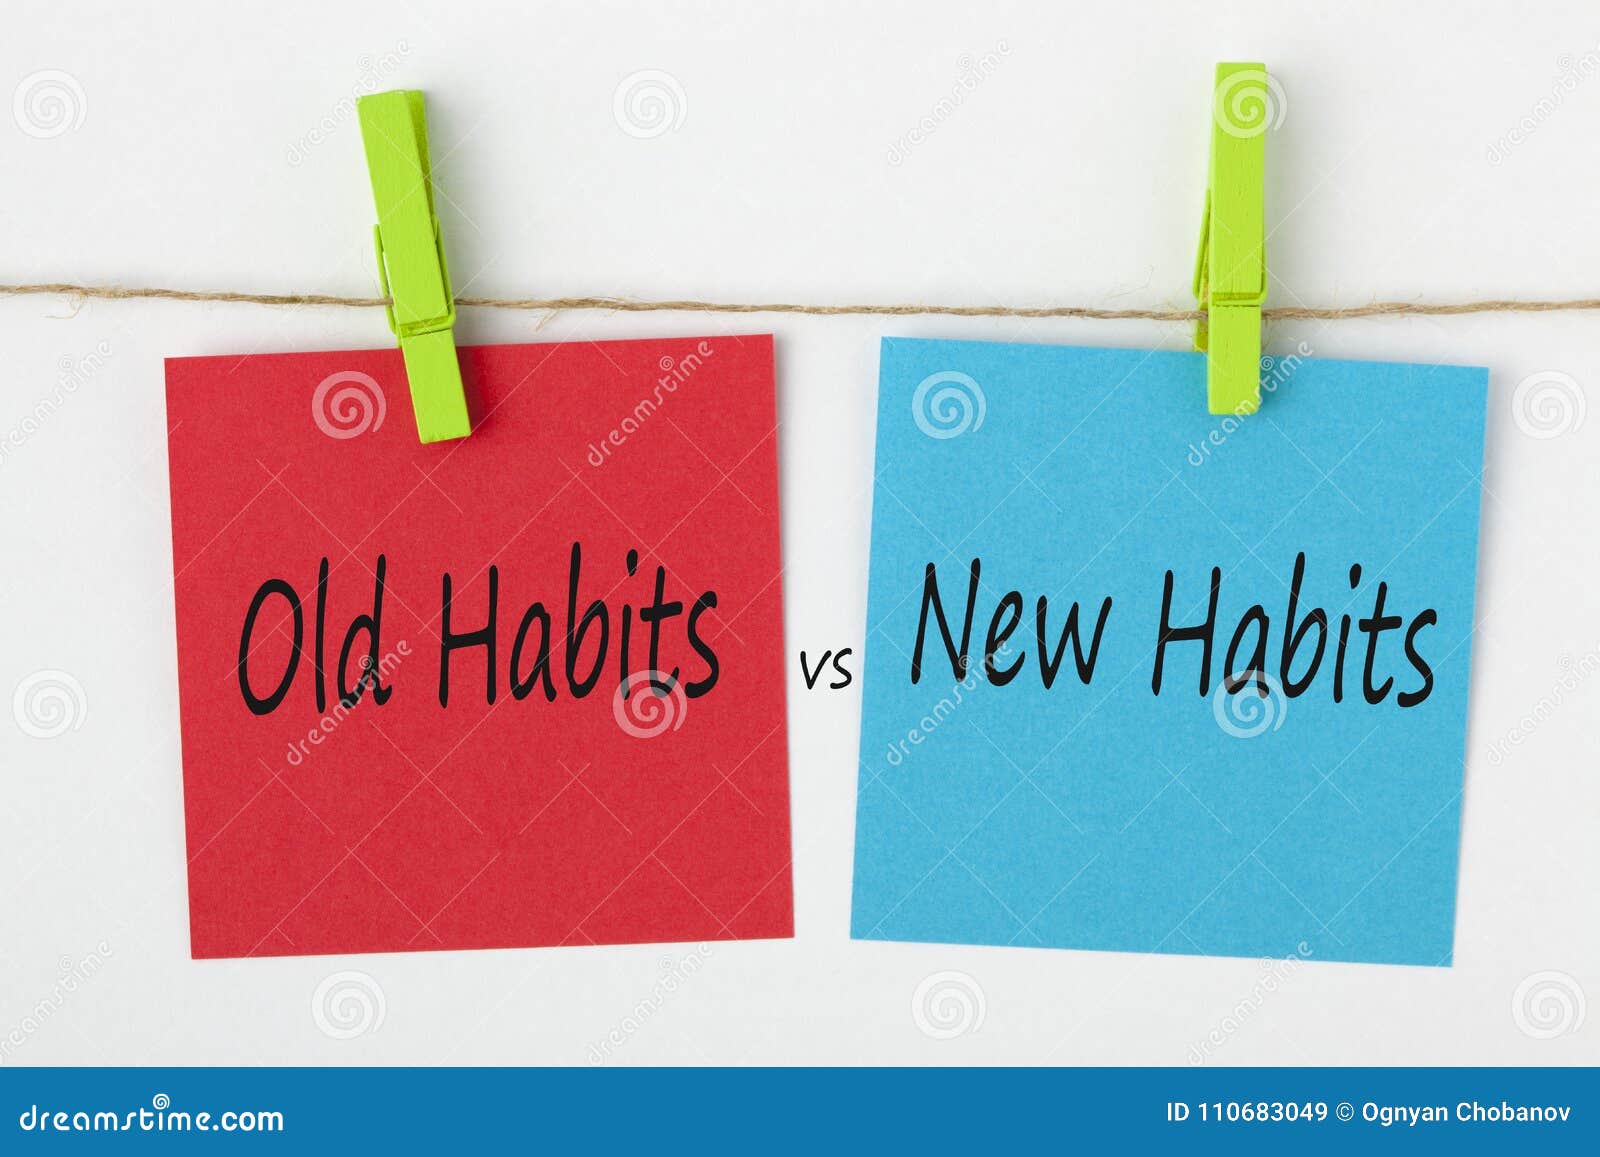 new habits vs old habits concept words